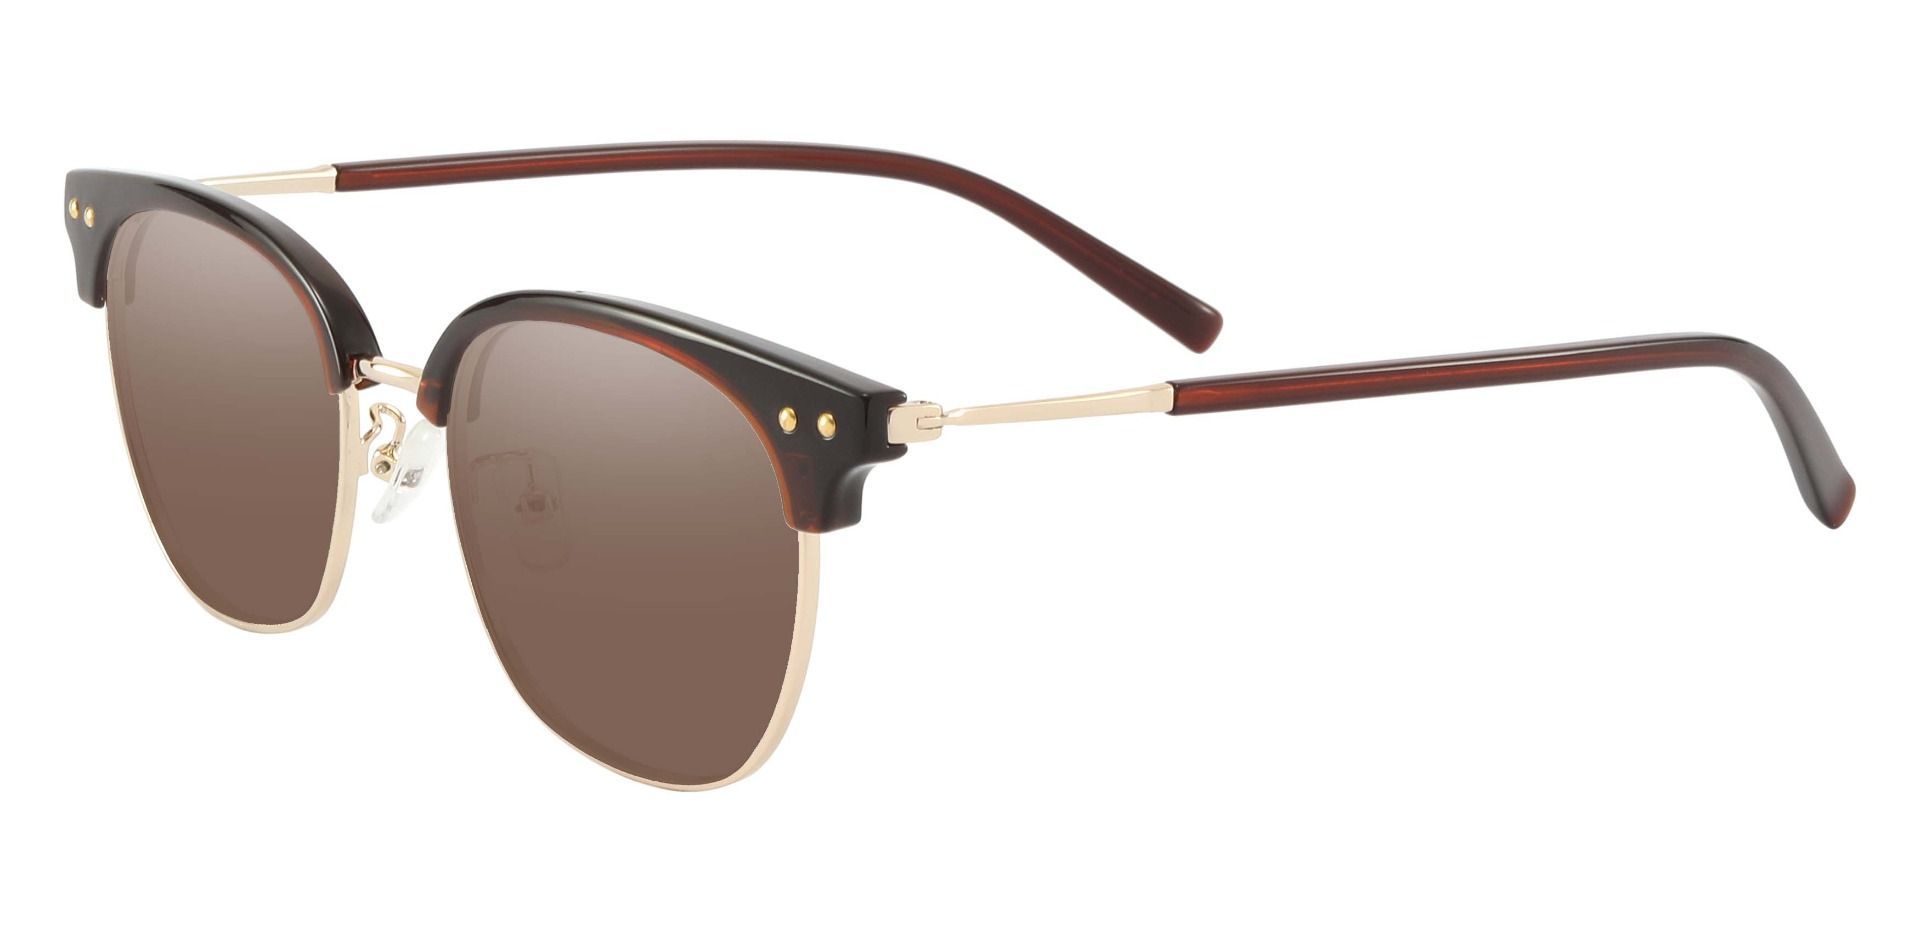 Bolivia Browline Prescription Sunglasses - Brown Frame With Brown Lenses